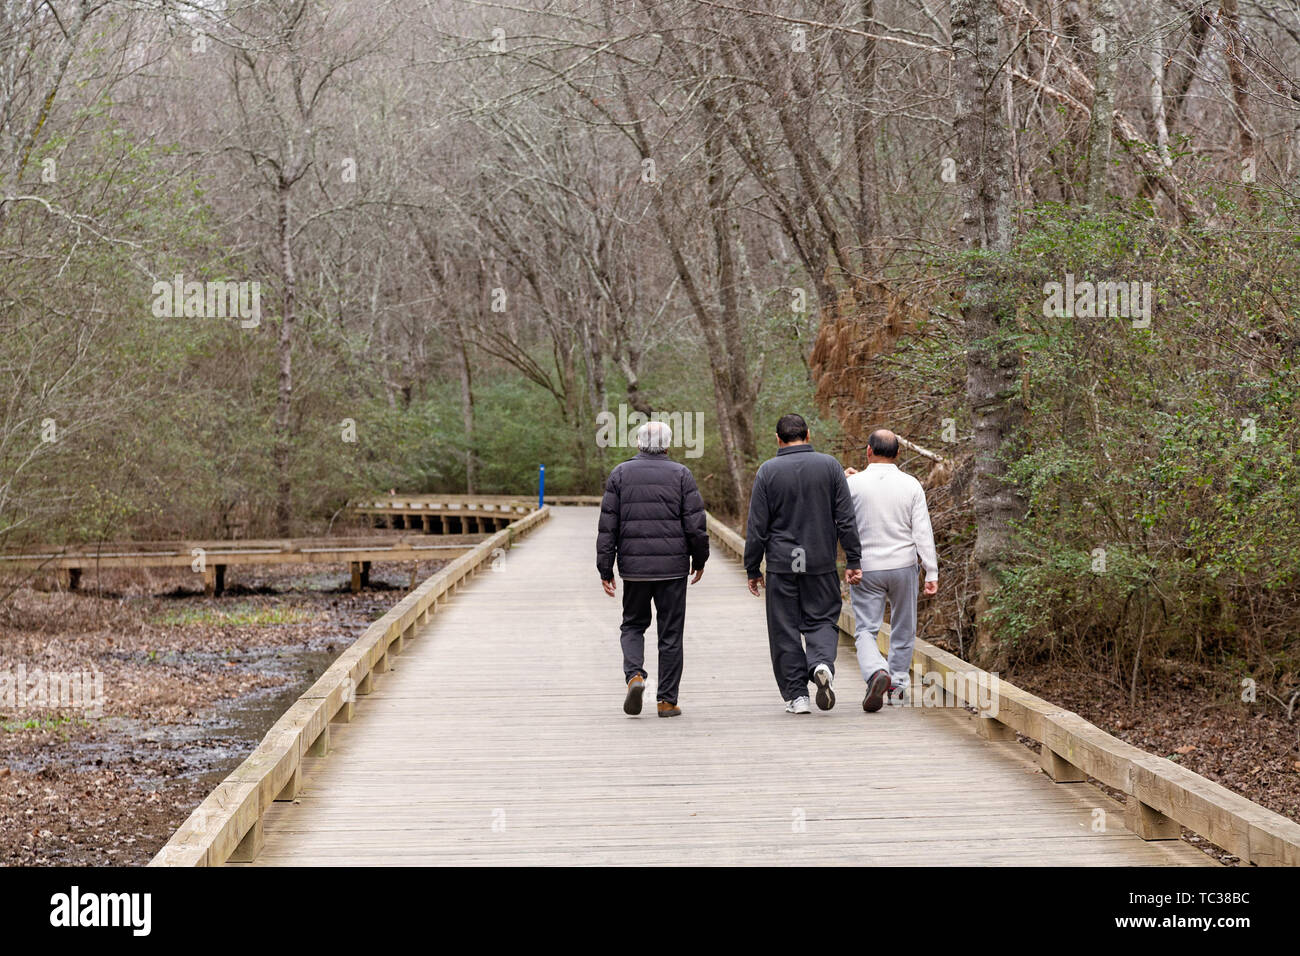 Three Men on a Walking path Stock Photo